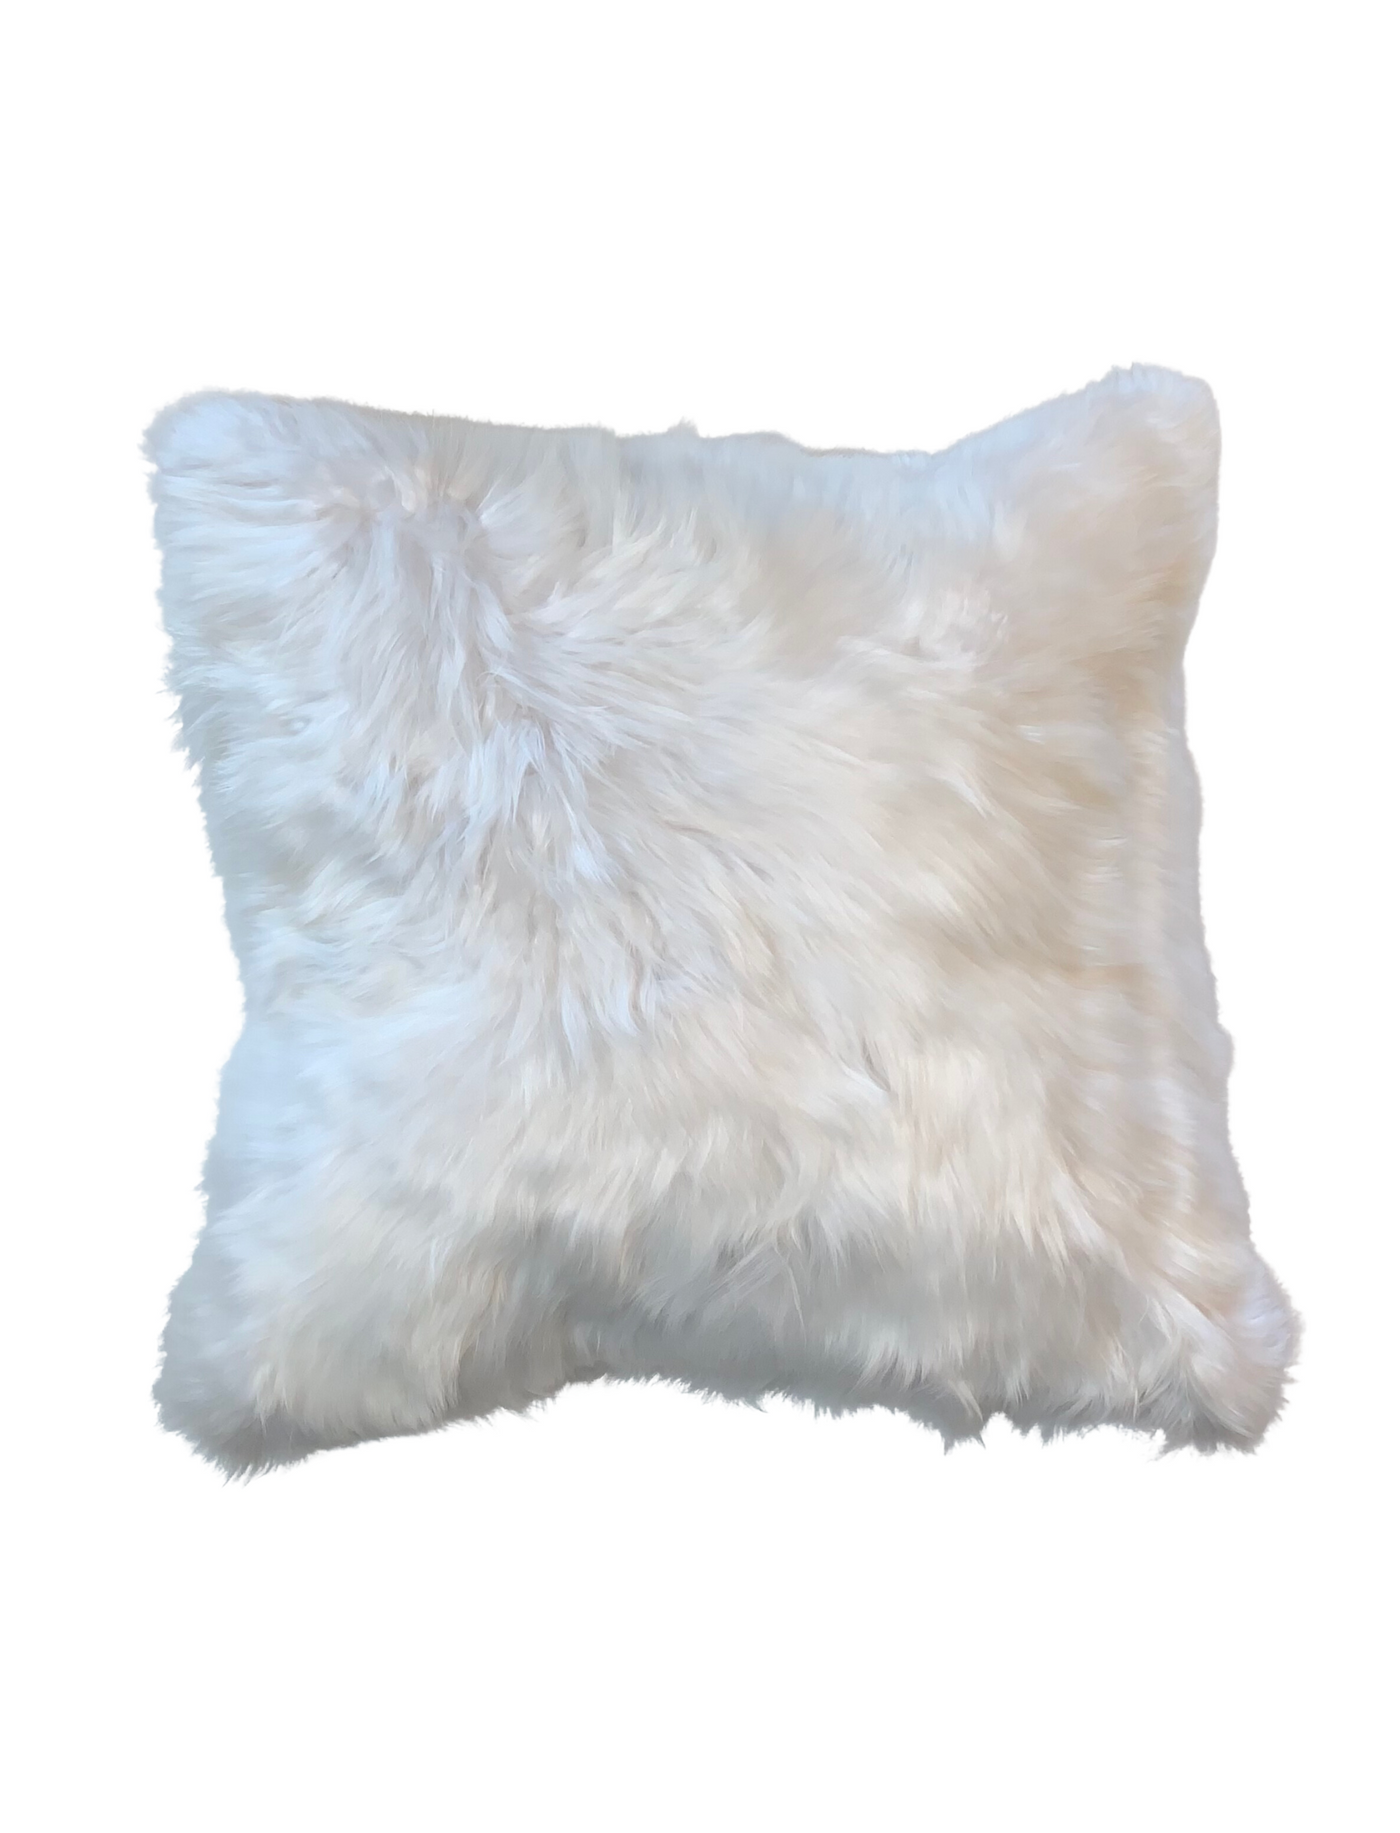 Suri Alpaca Pillows